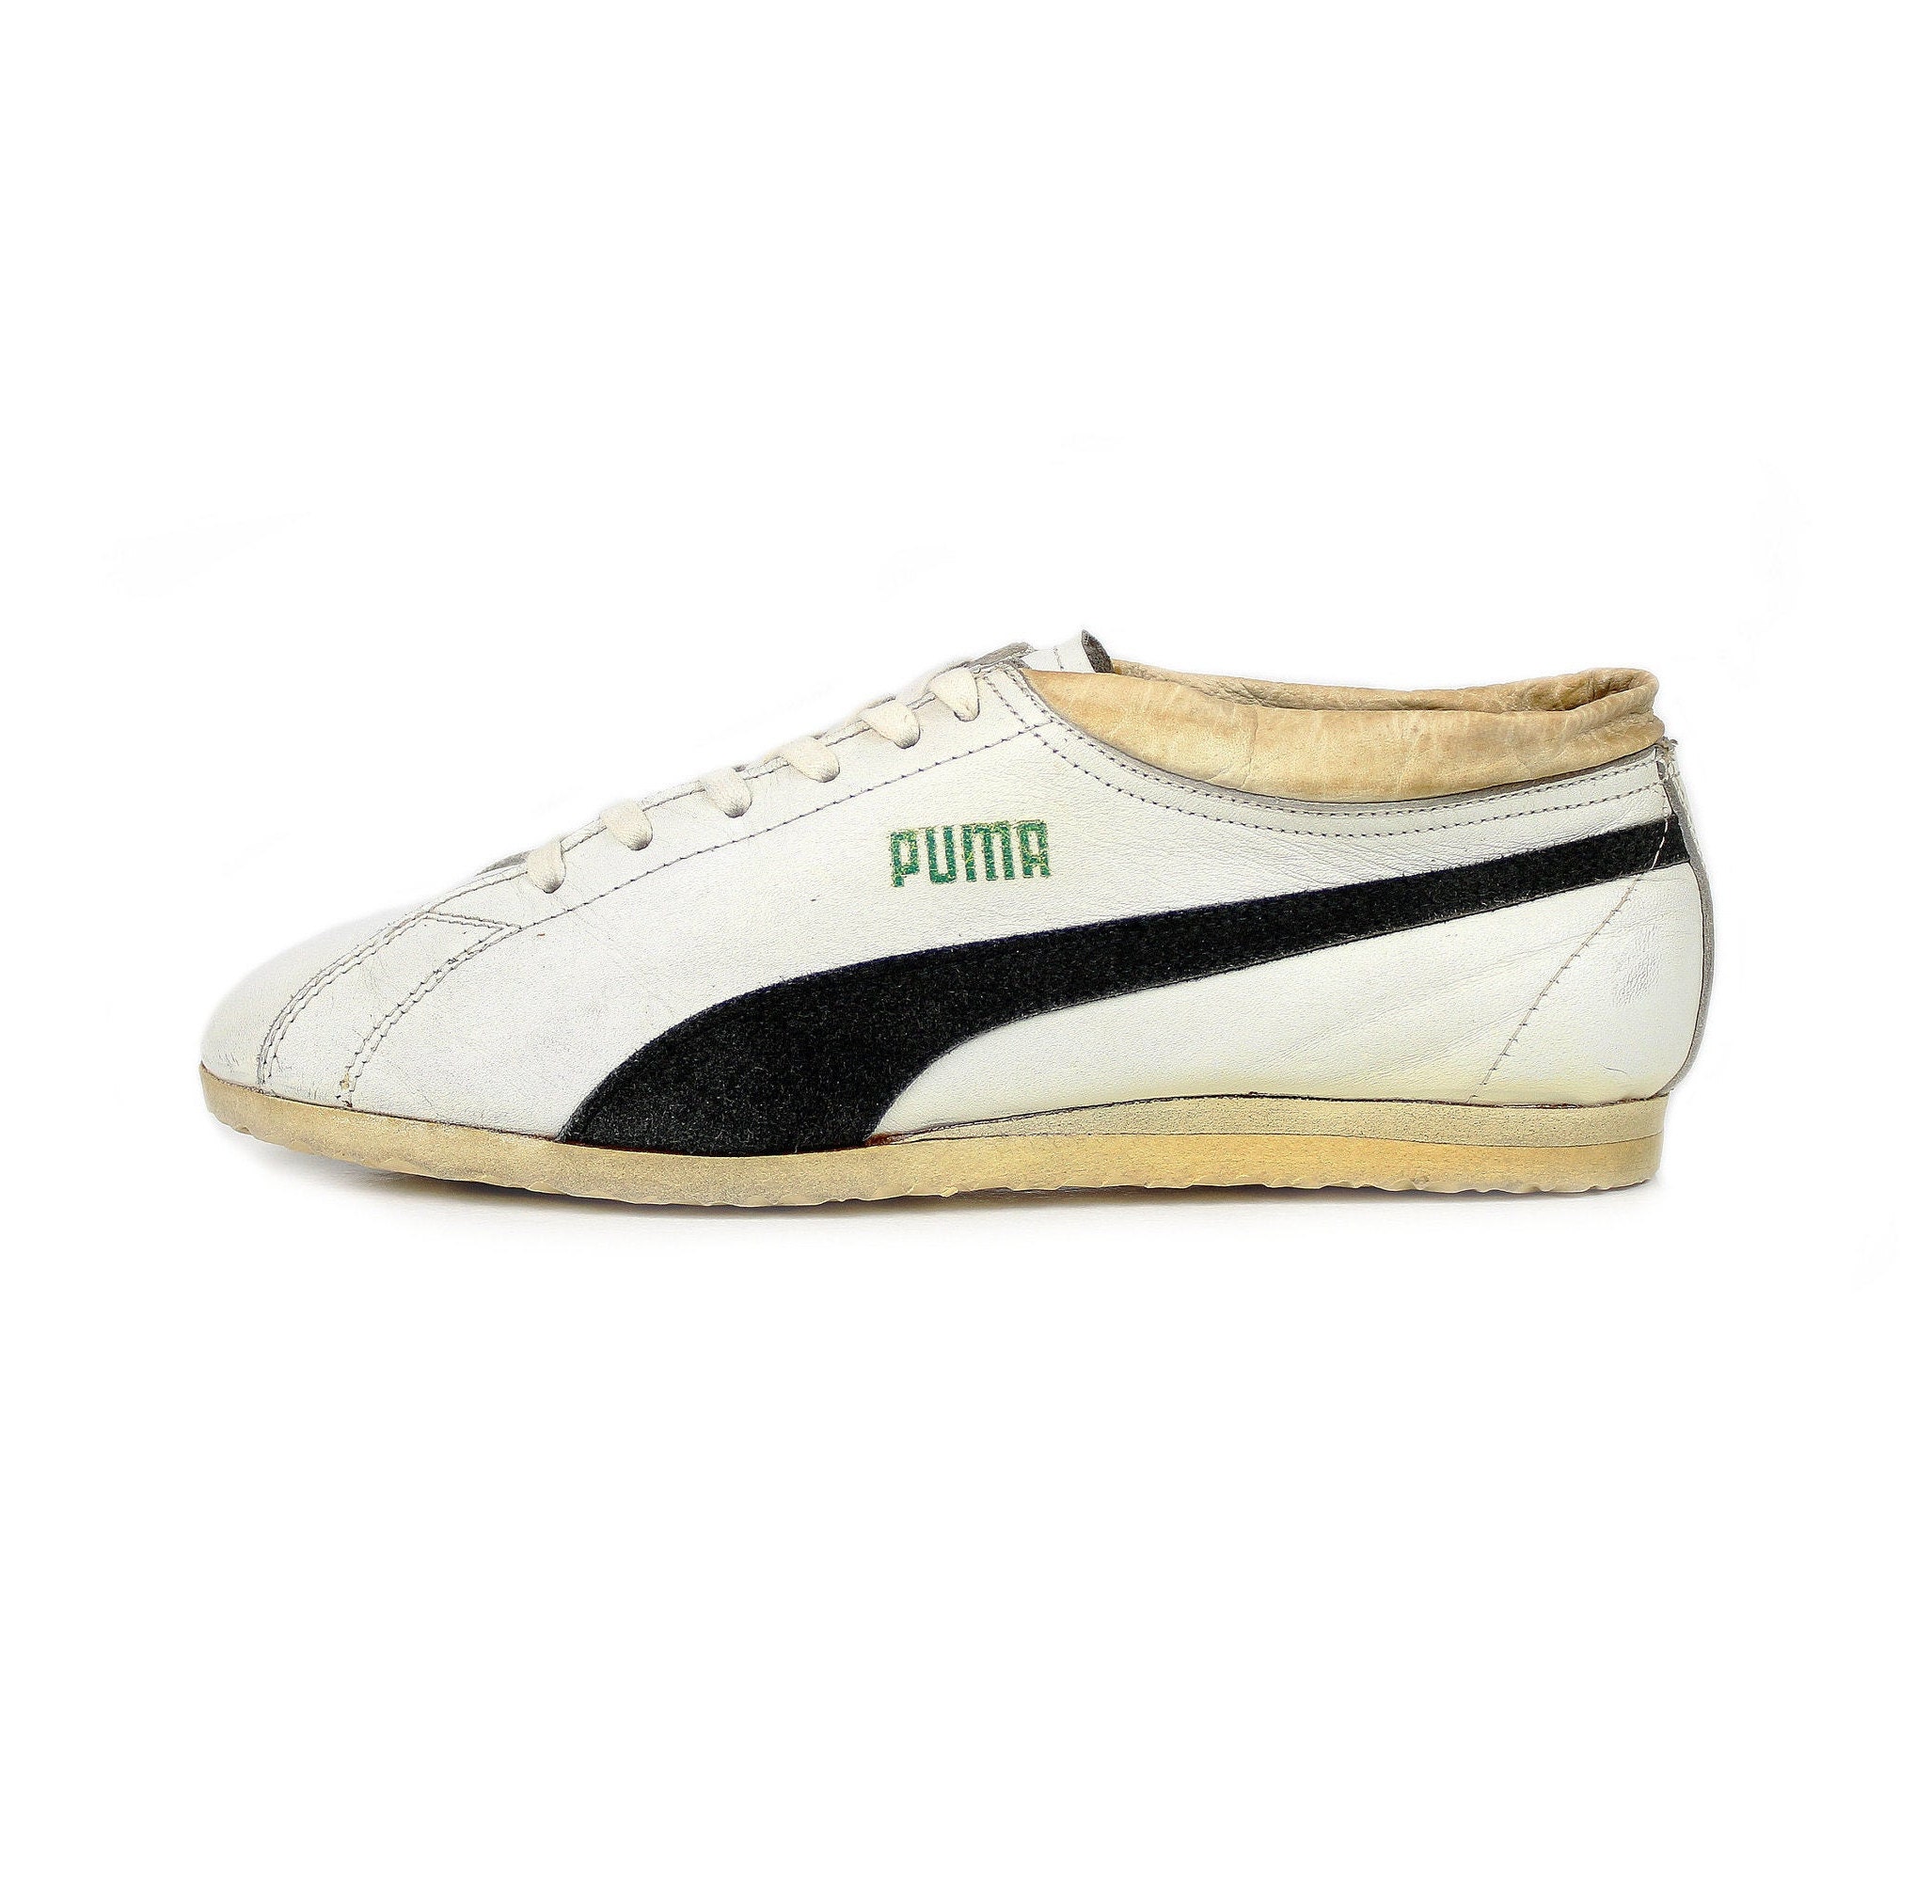 Vintage Puma Shoes - Etsy